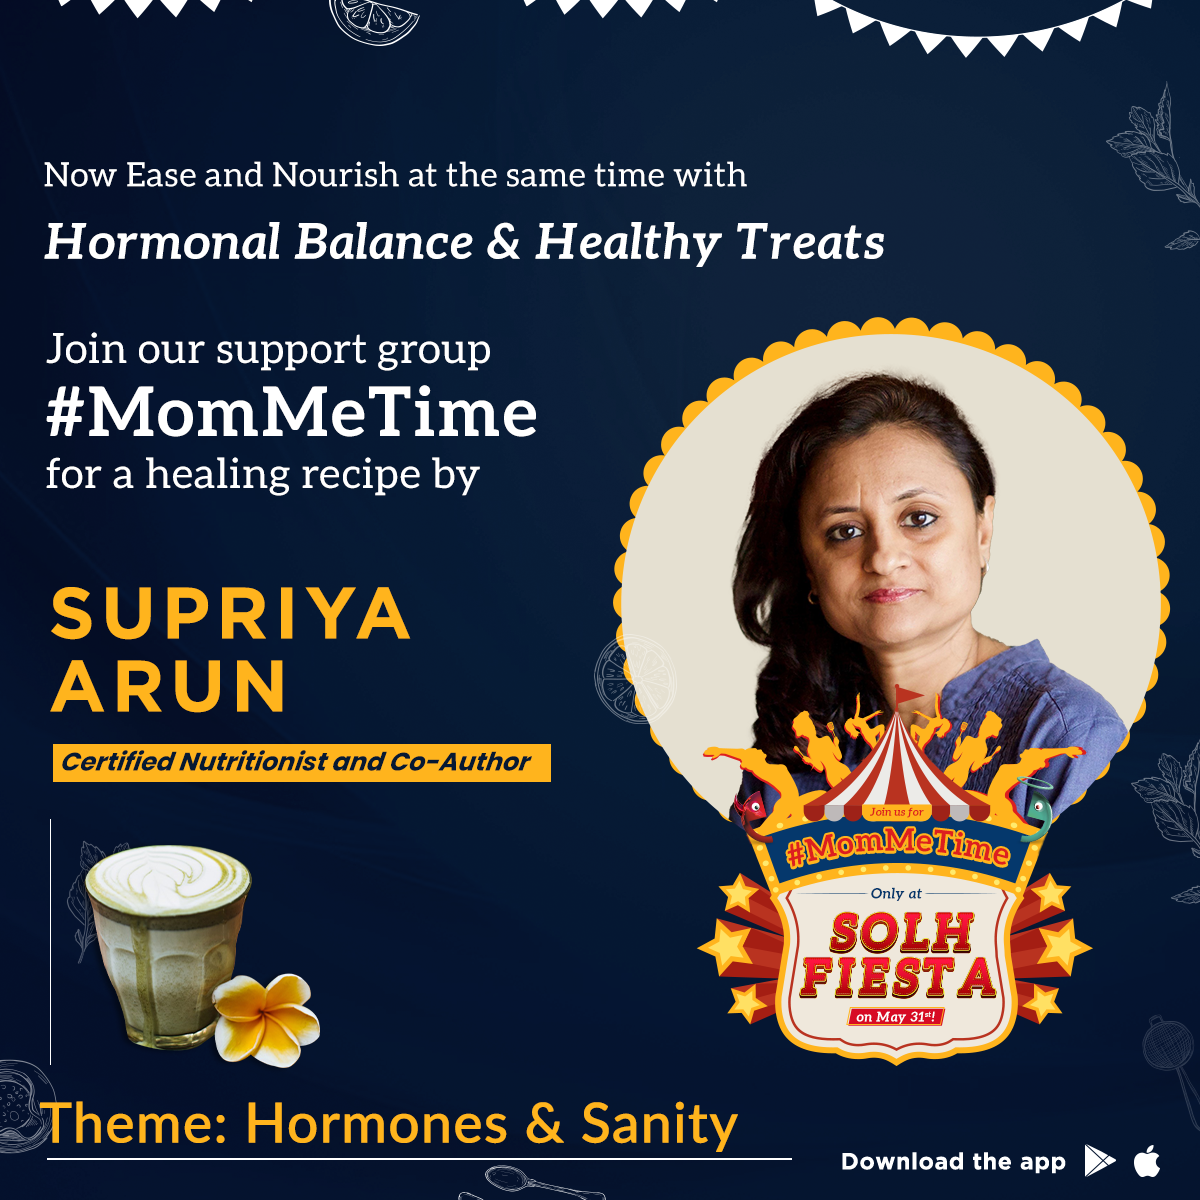 Hormonal Balance & Healthy Treats by Supriya Arun | MomMetime, Online Event